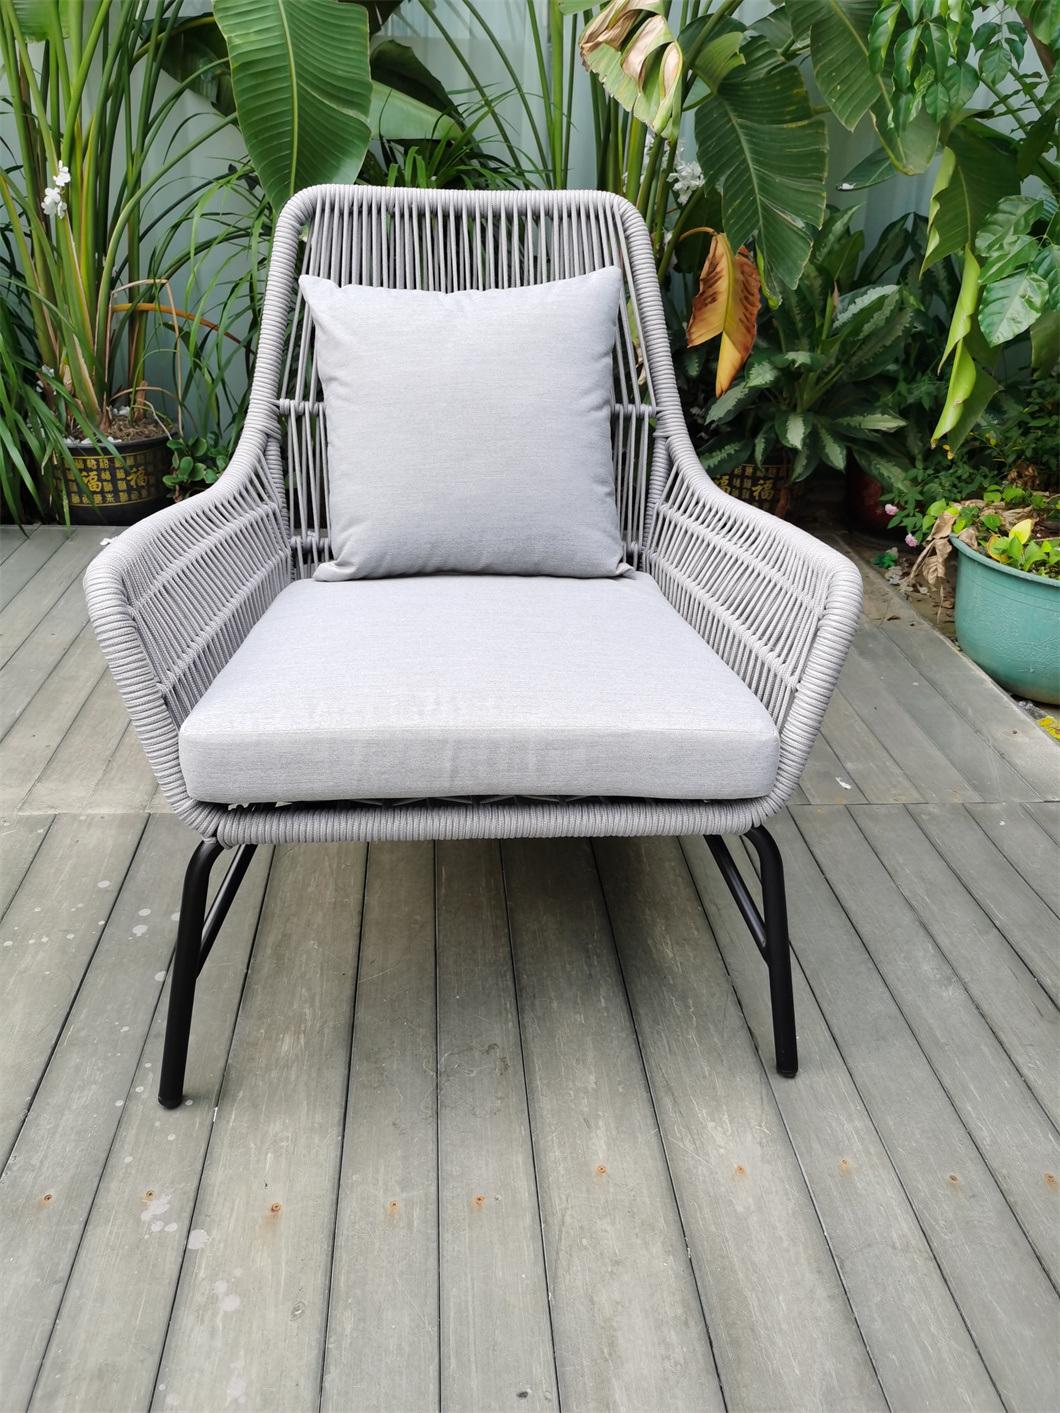 Modern Style Home Garden Patio Outdoor Rattan Furniture Set Chair